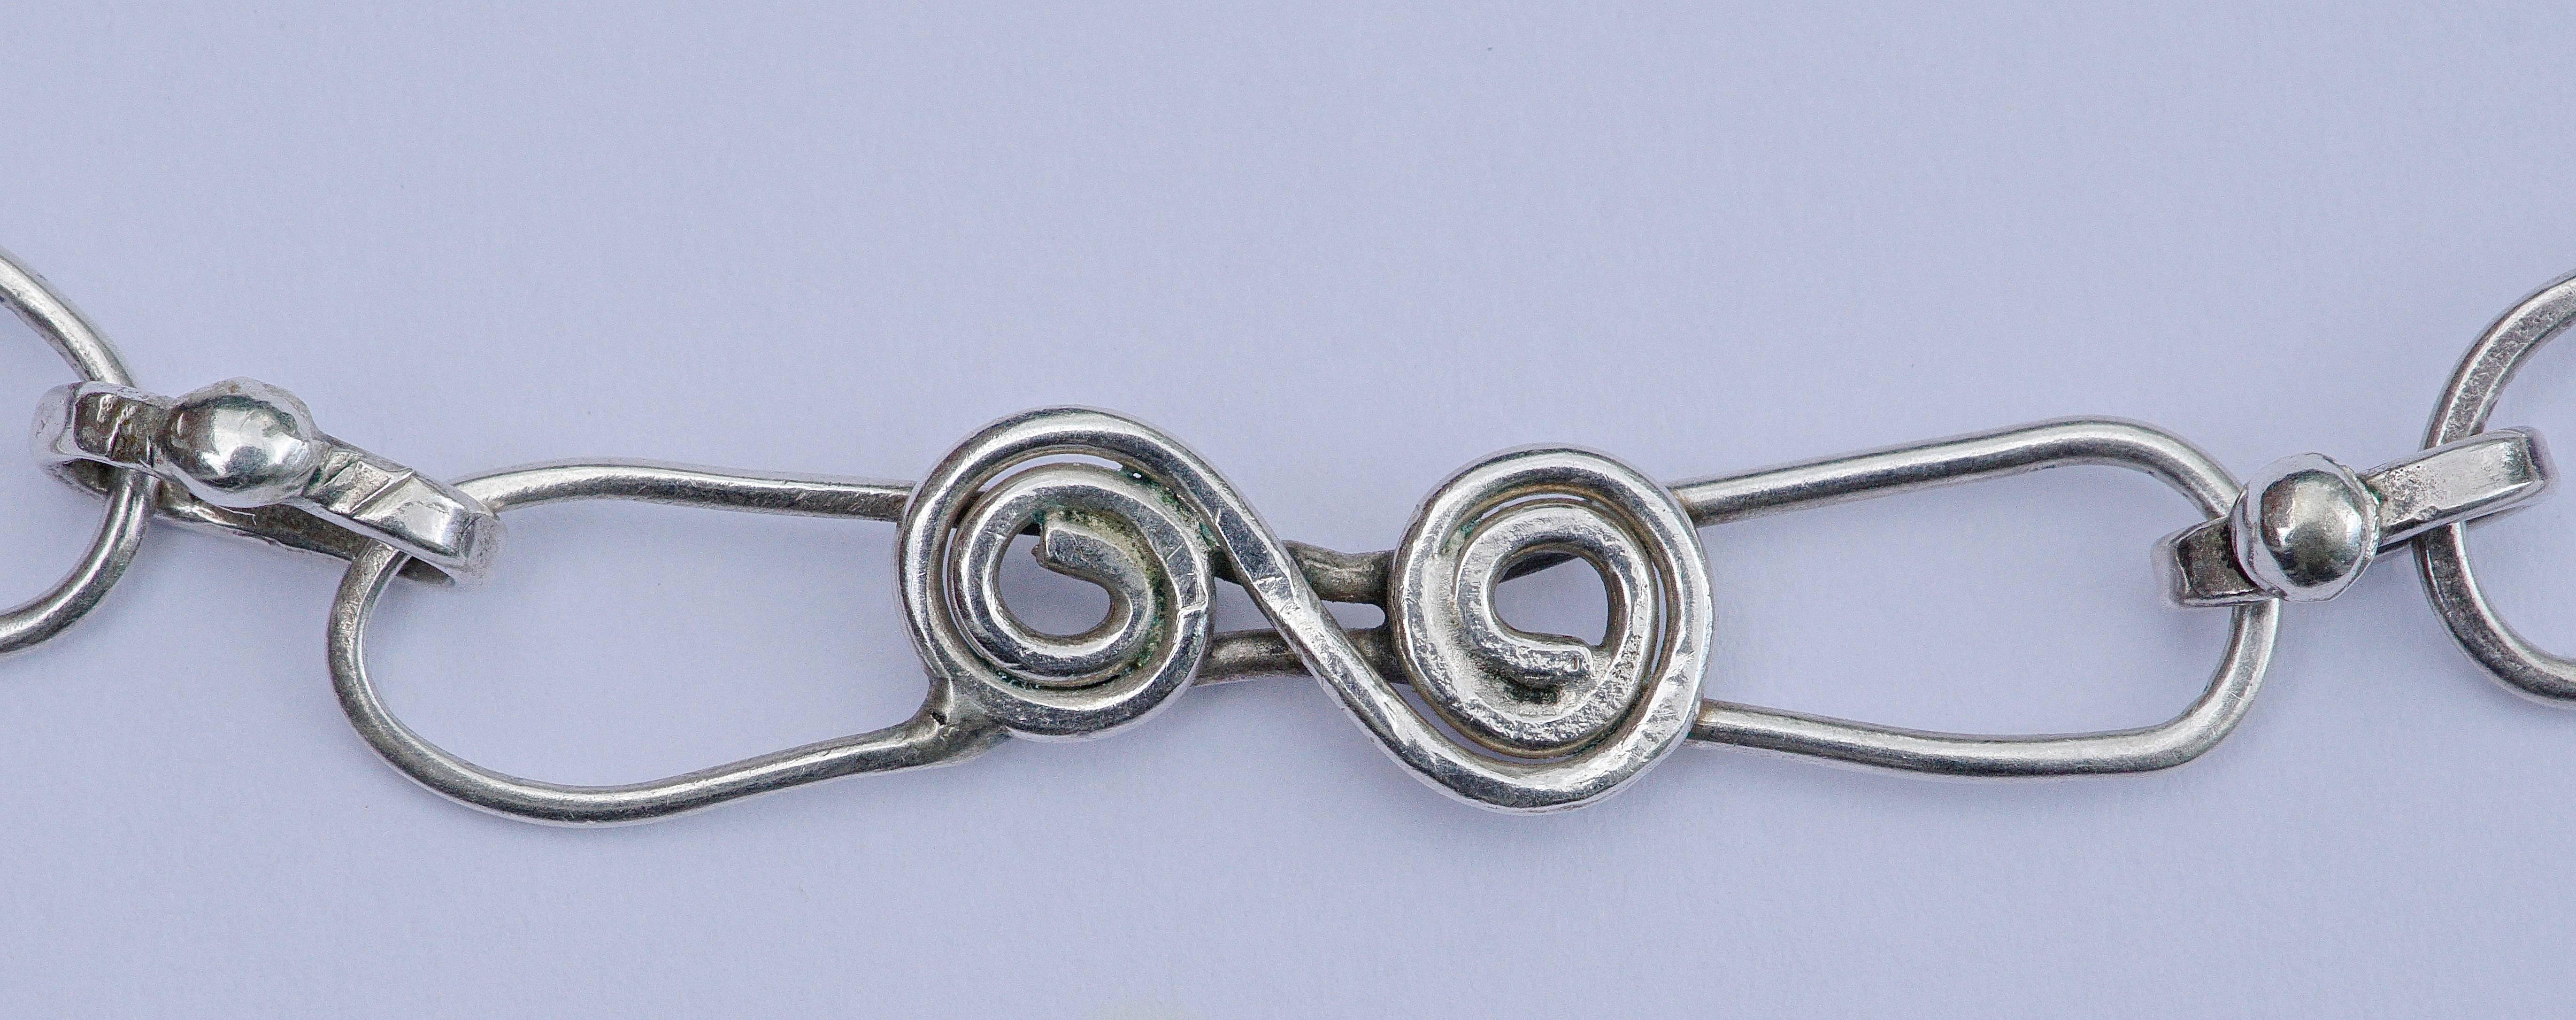 silver swirl necklace